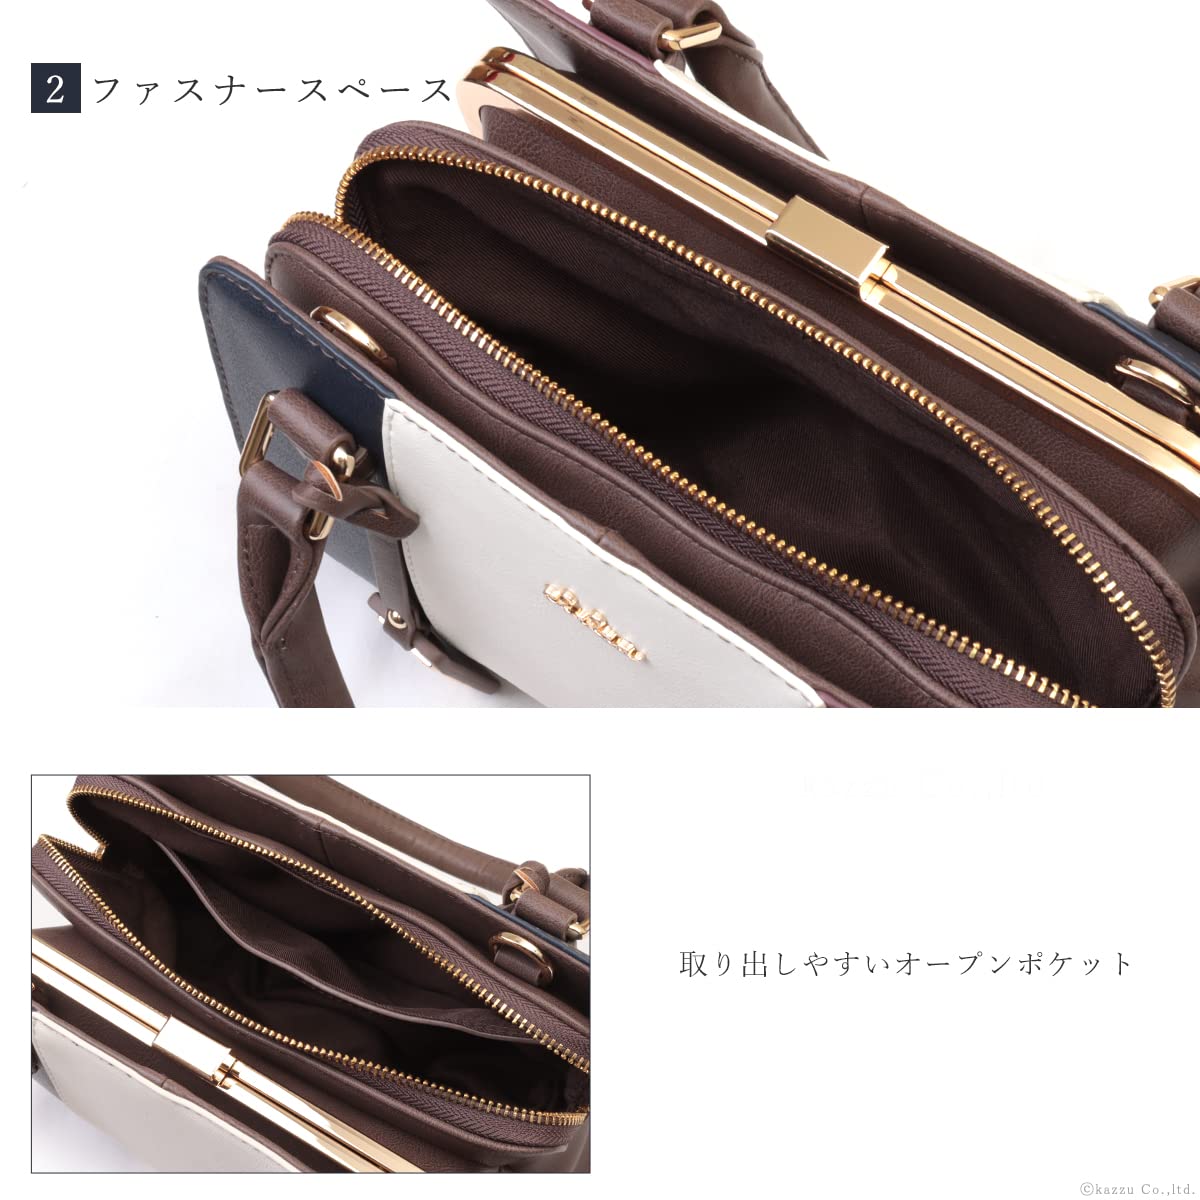 Cleria CL-22883 Riberte Series Women's Shoulder Bag, Coin Pouch, Tricolor 2-Way Handbag